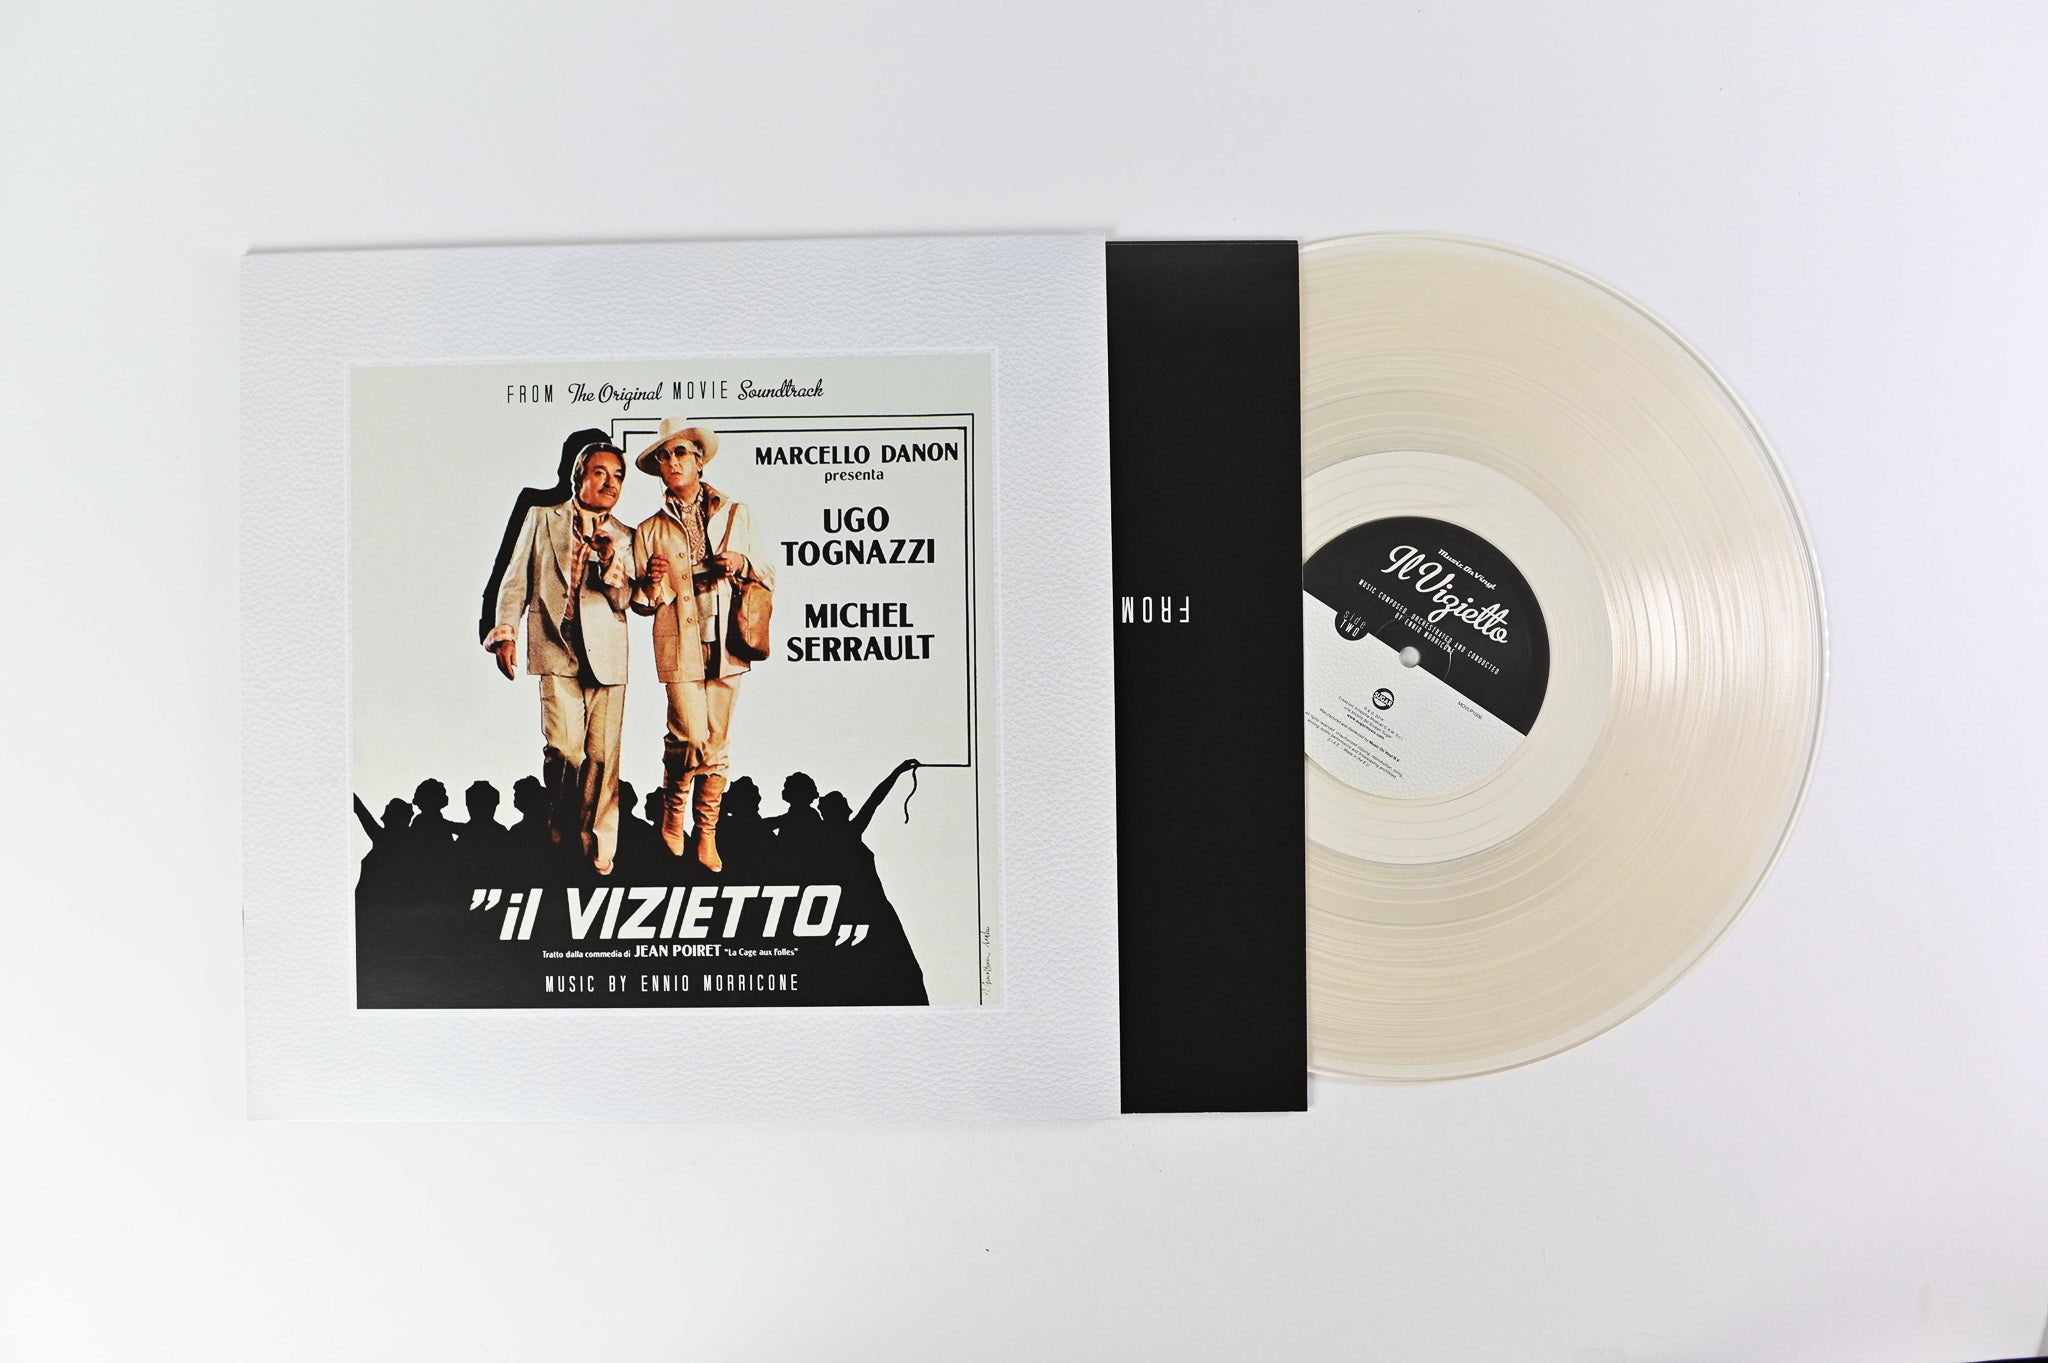 Ennio Morricone - Il Vizietto on Music On Vinyl Transparent Vinyl